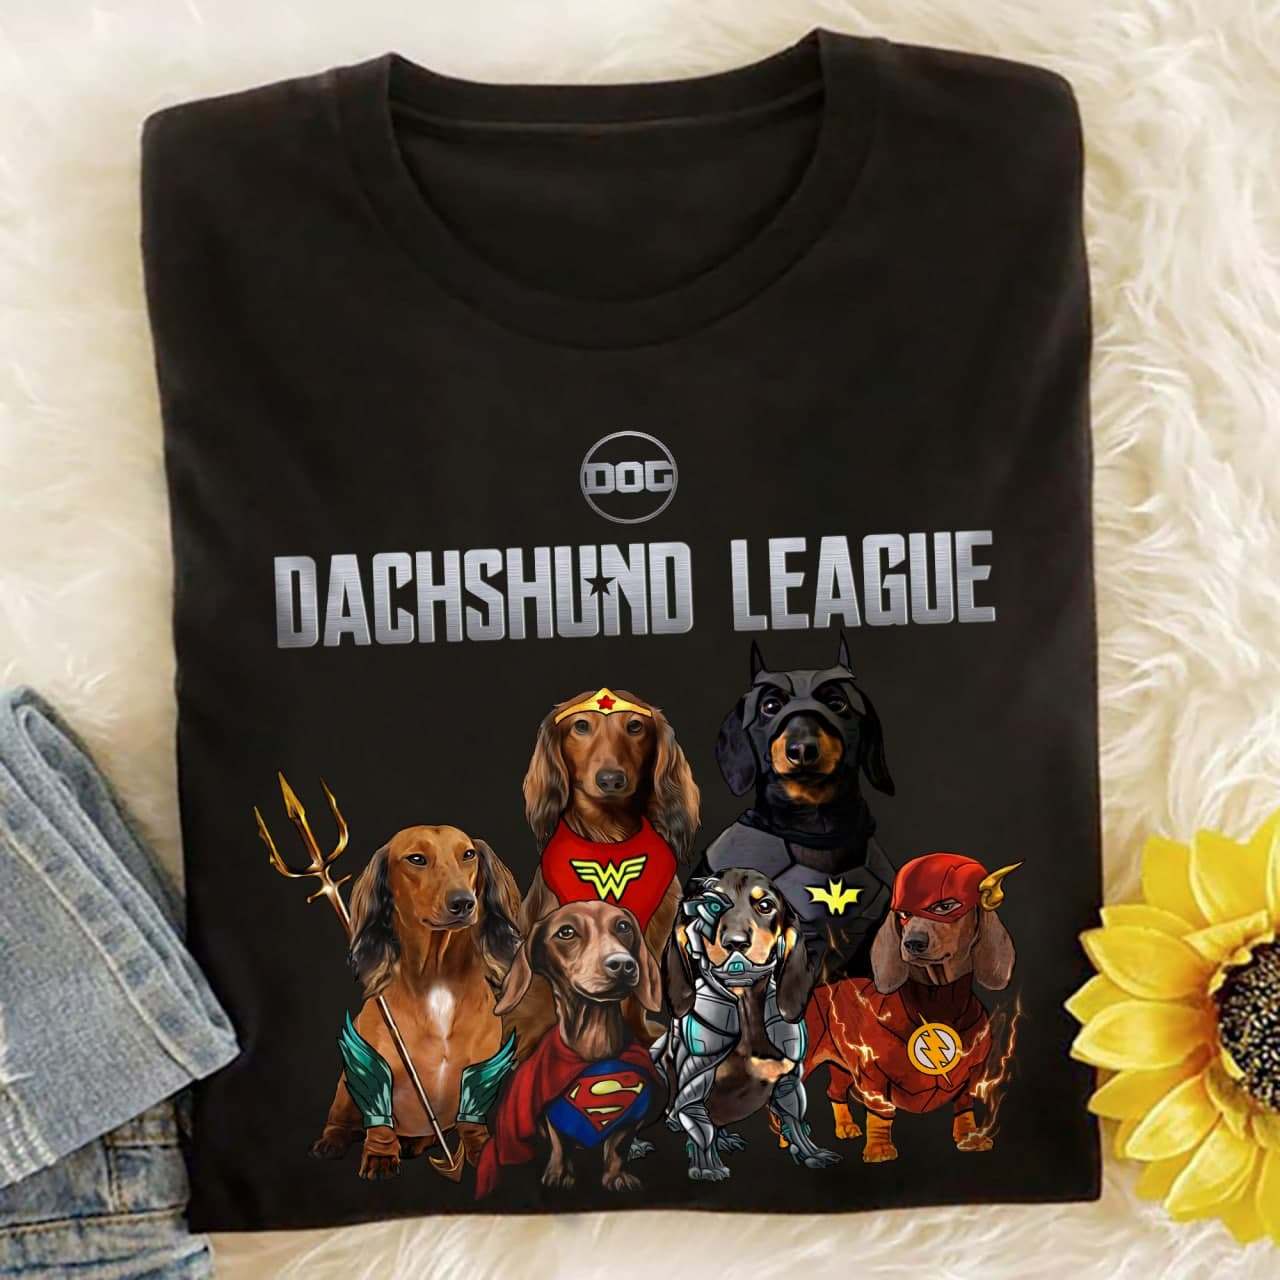 Dachshund league - Justice league, Dachshund dog